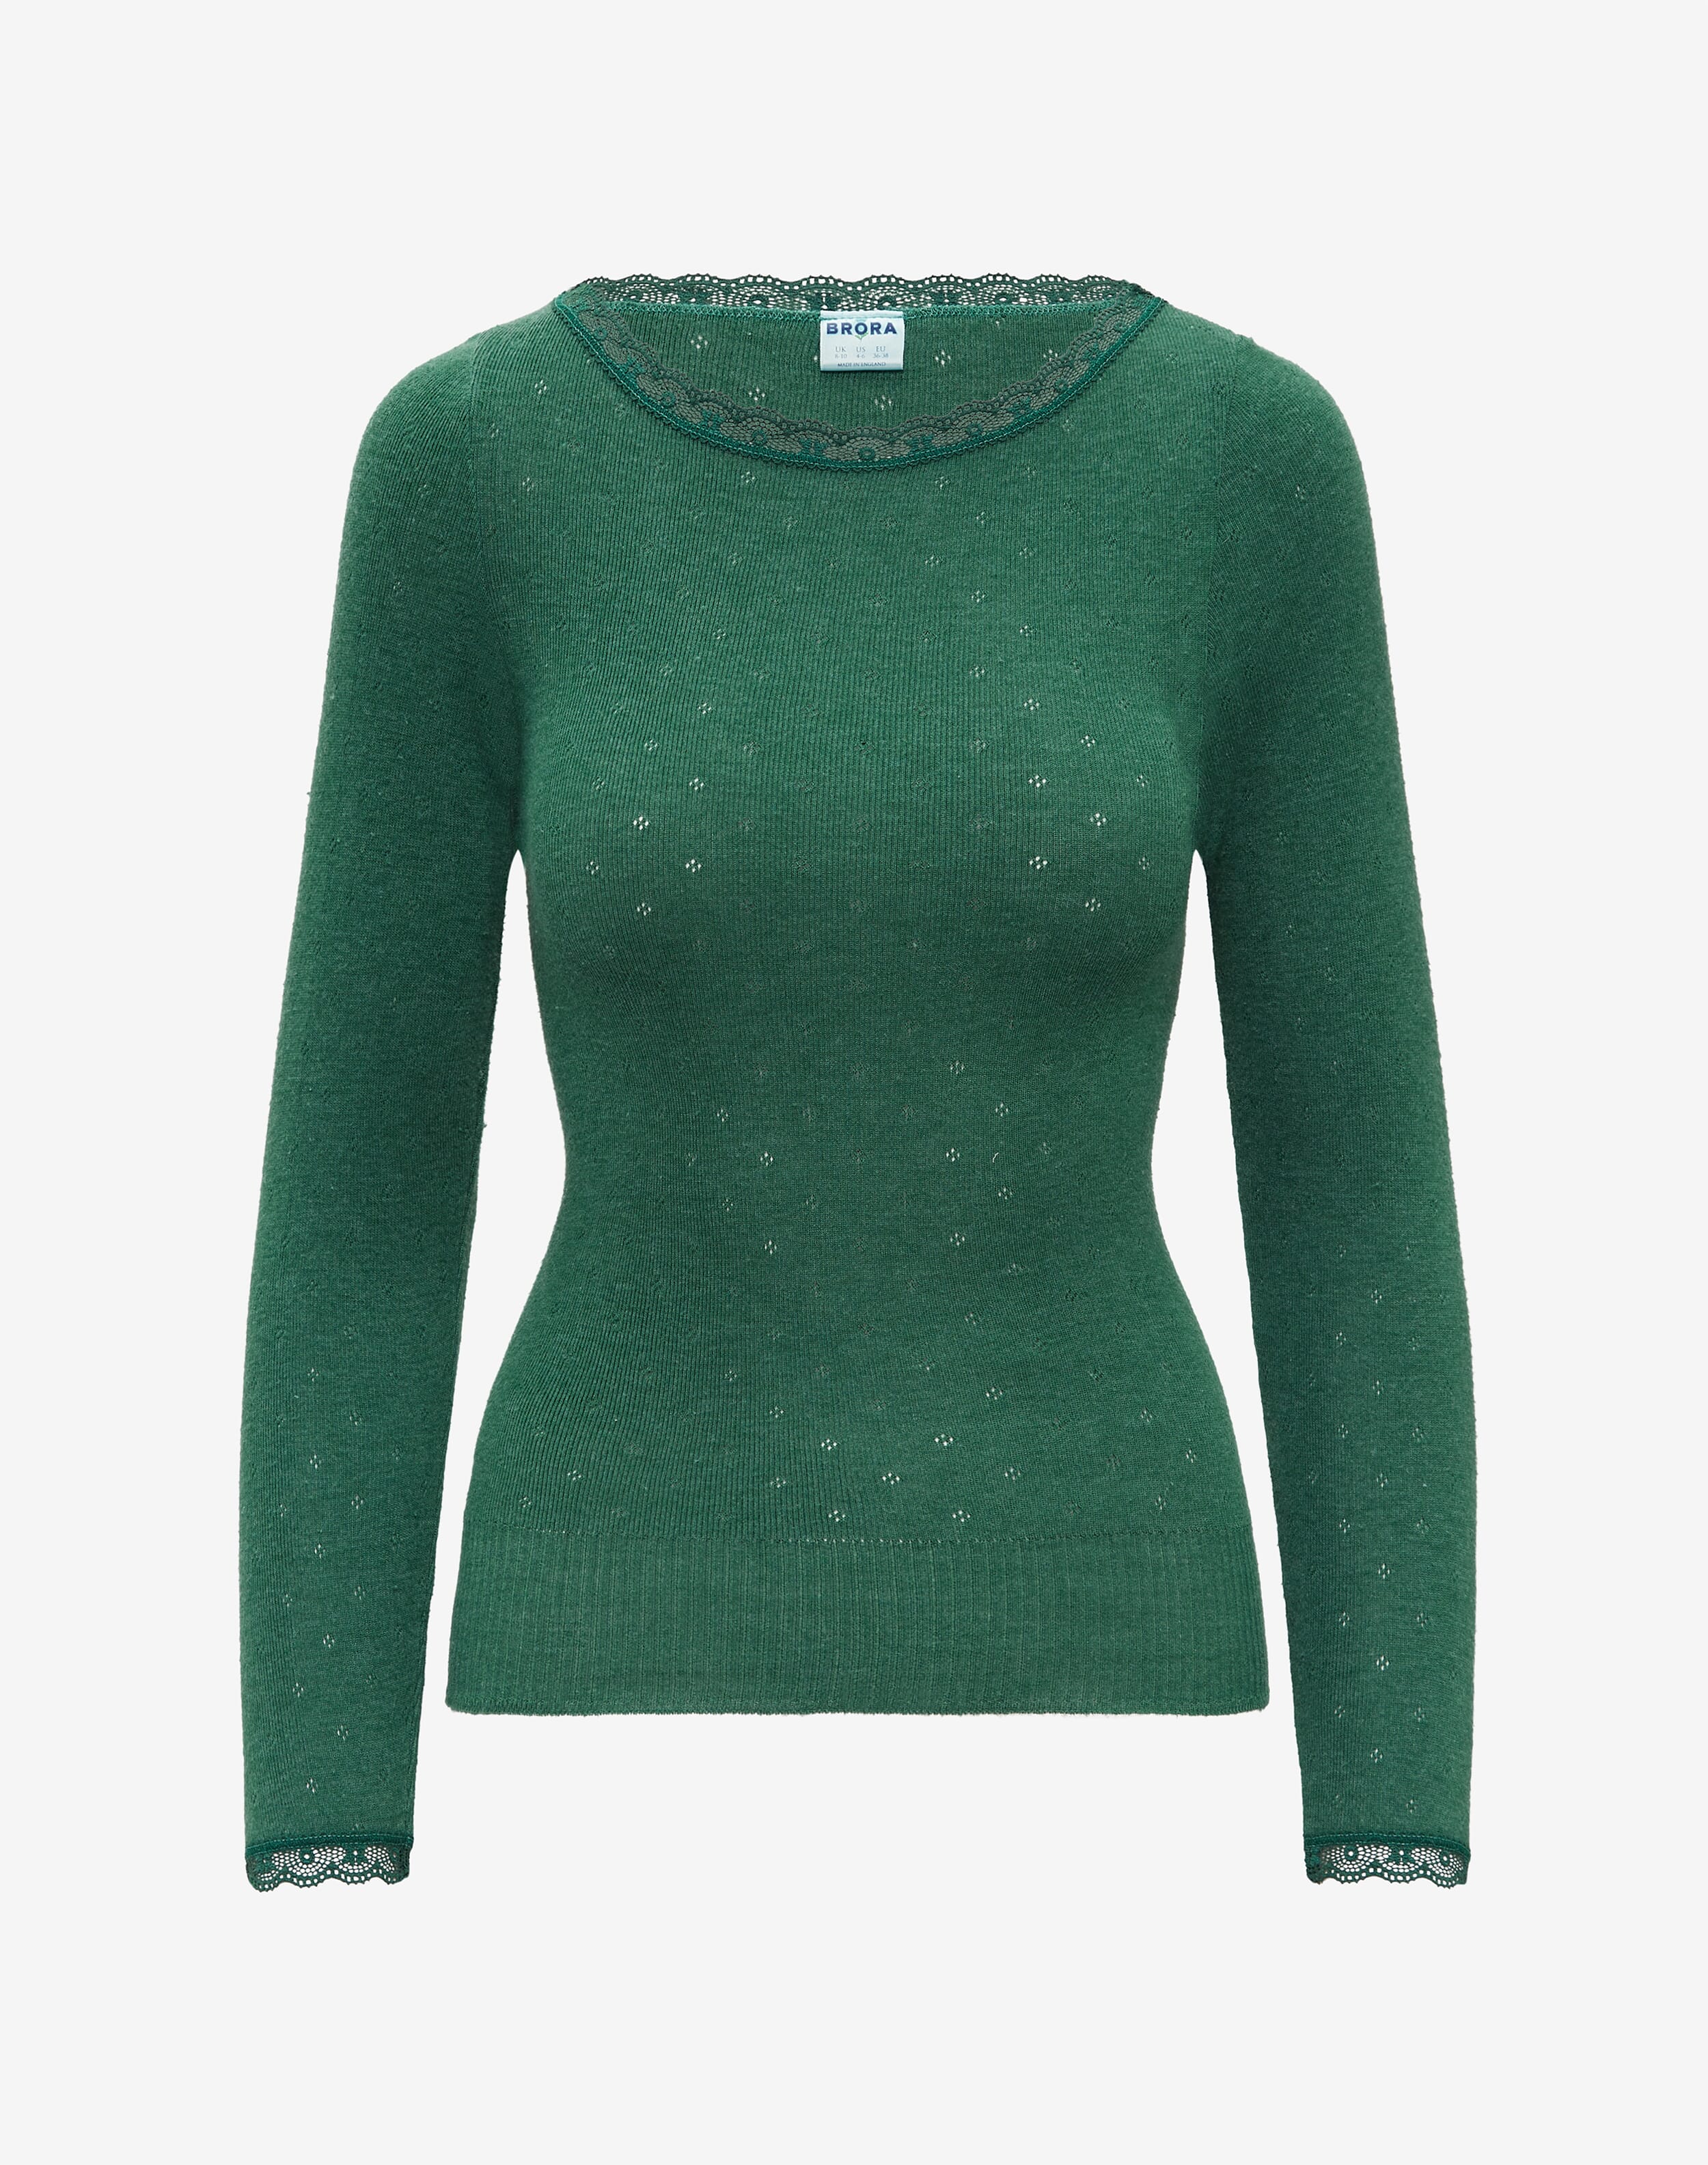 Lace Trim Scoop Neck in Emerald | Women's Nightwear | Brora